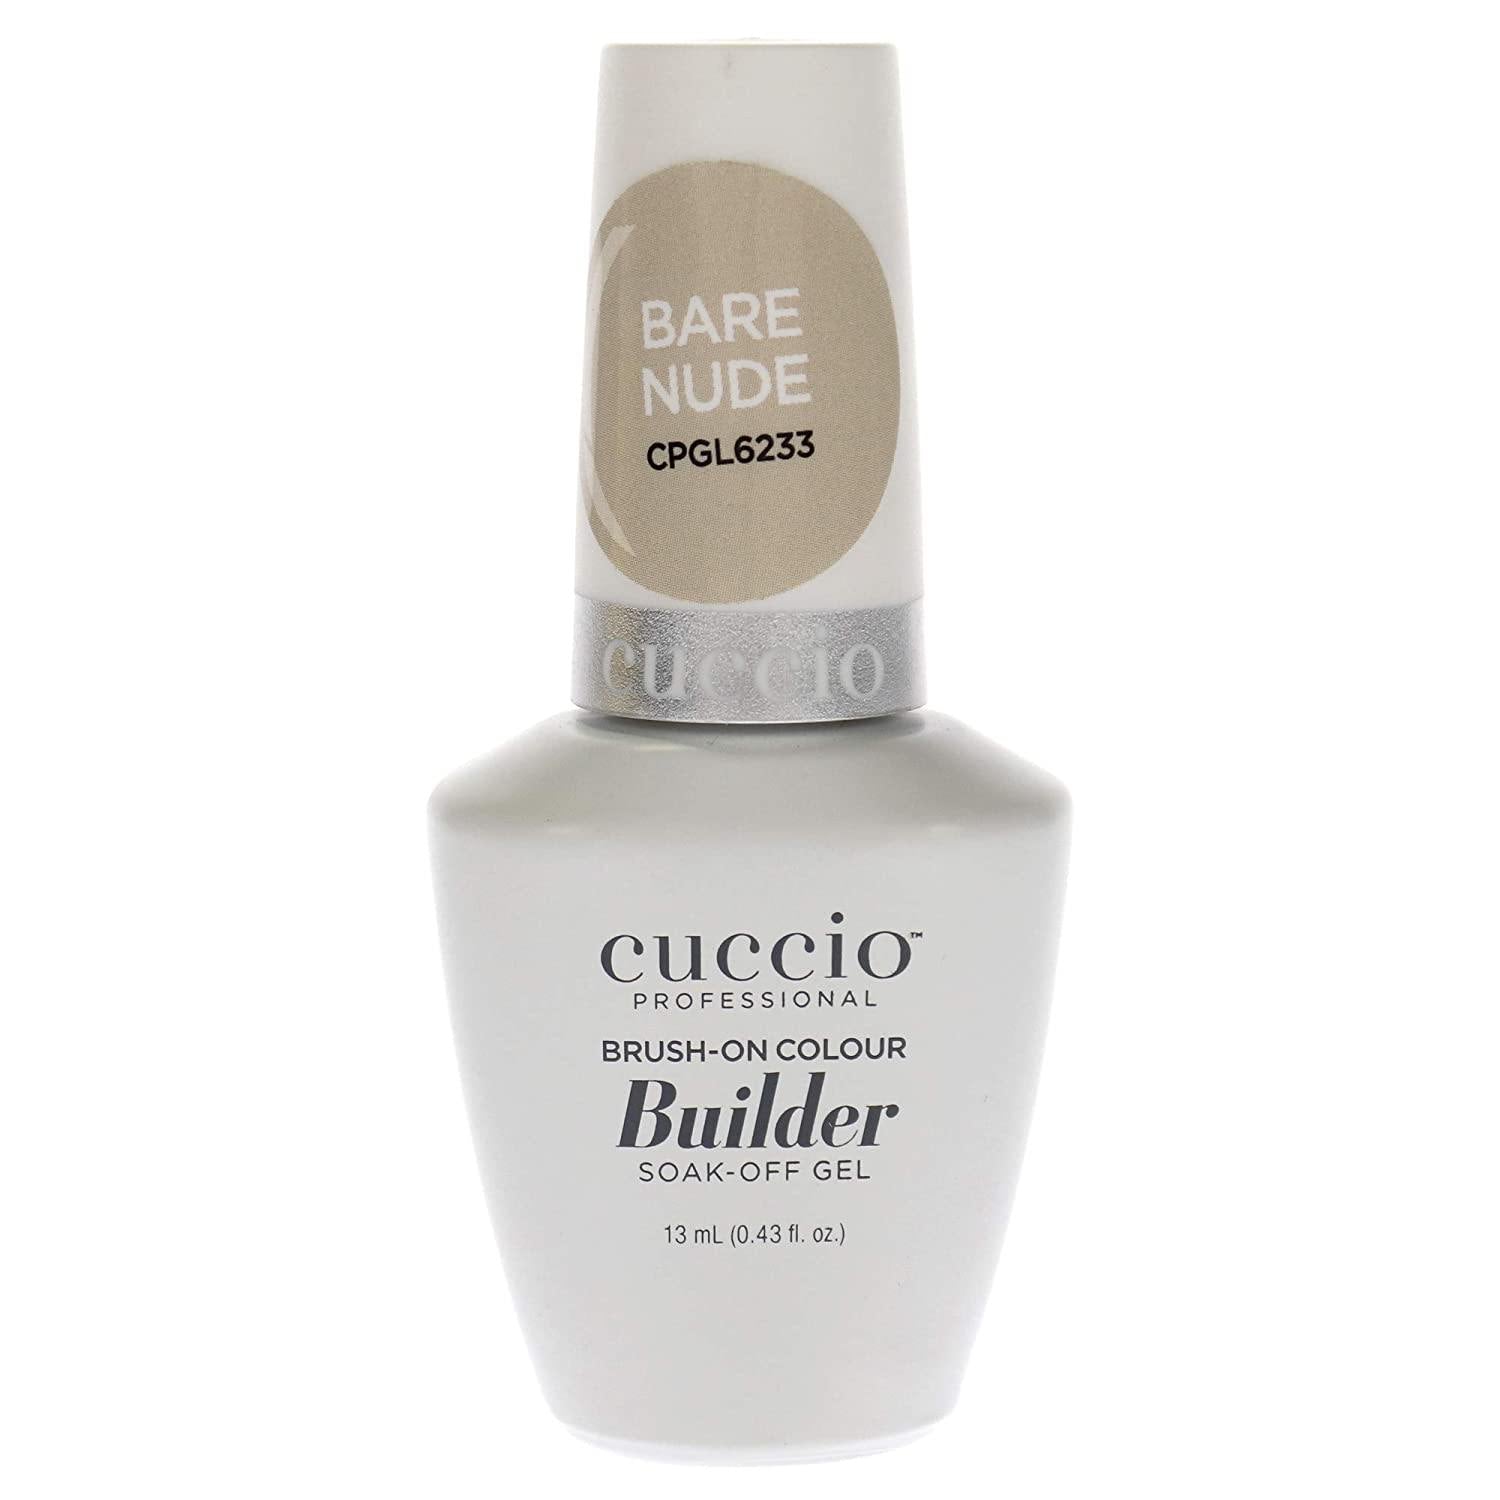 CUCCIO PRO BRUSH-ON COLOUR BUILDER GEL 15 ml - Bare Nude - Sanida Beauty